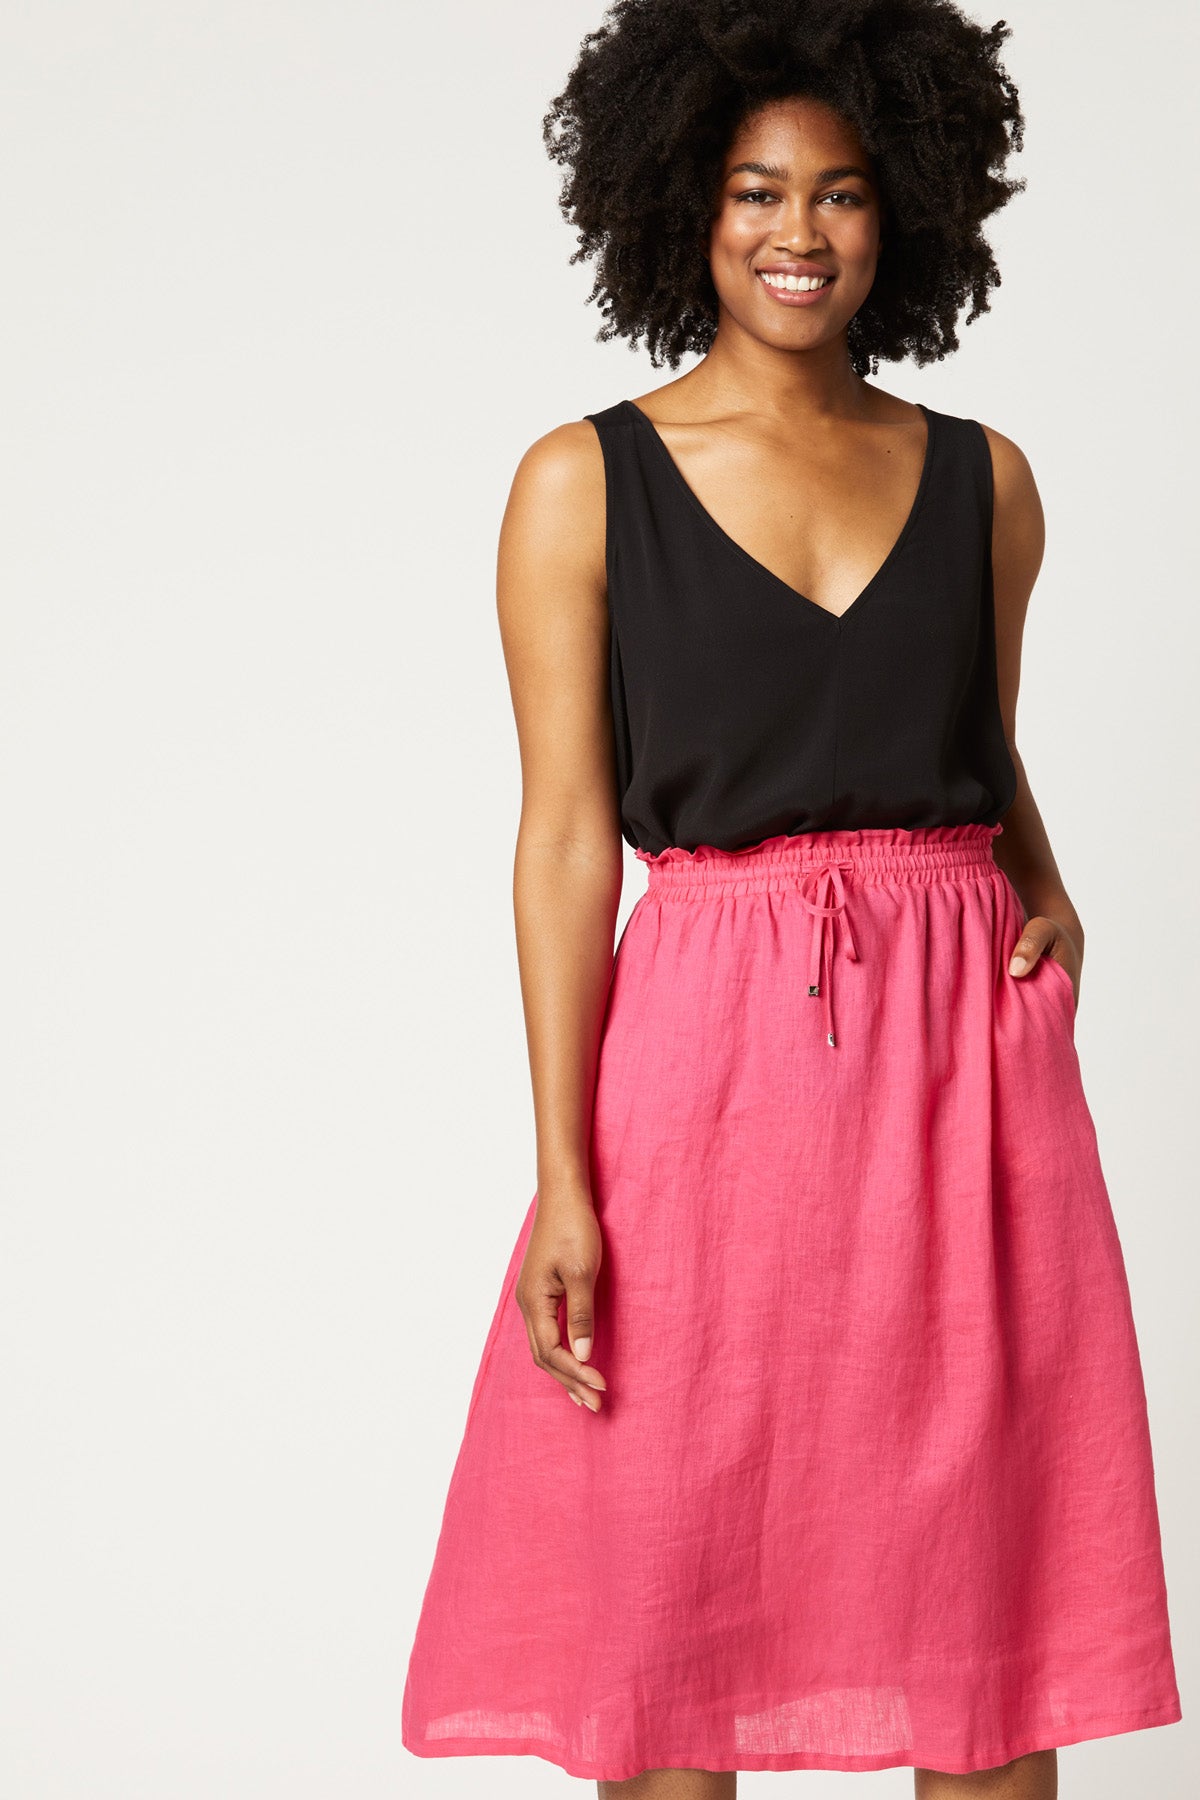 Nala Skirt - Flamingo - eb&ive Clothing - Skirt Mid Linen